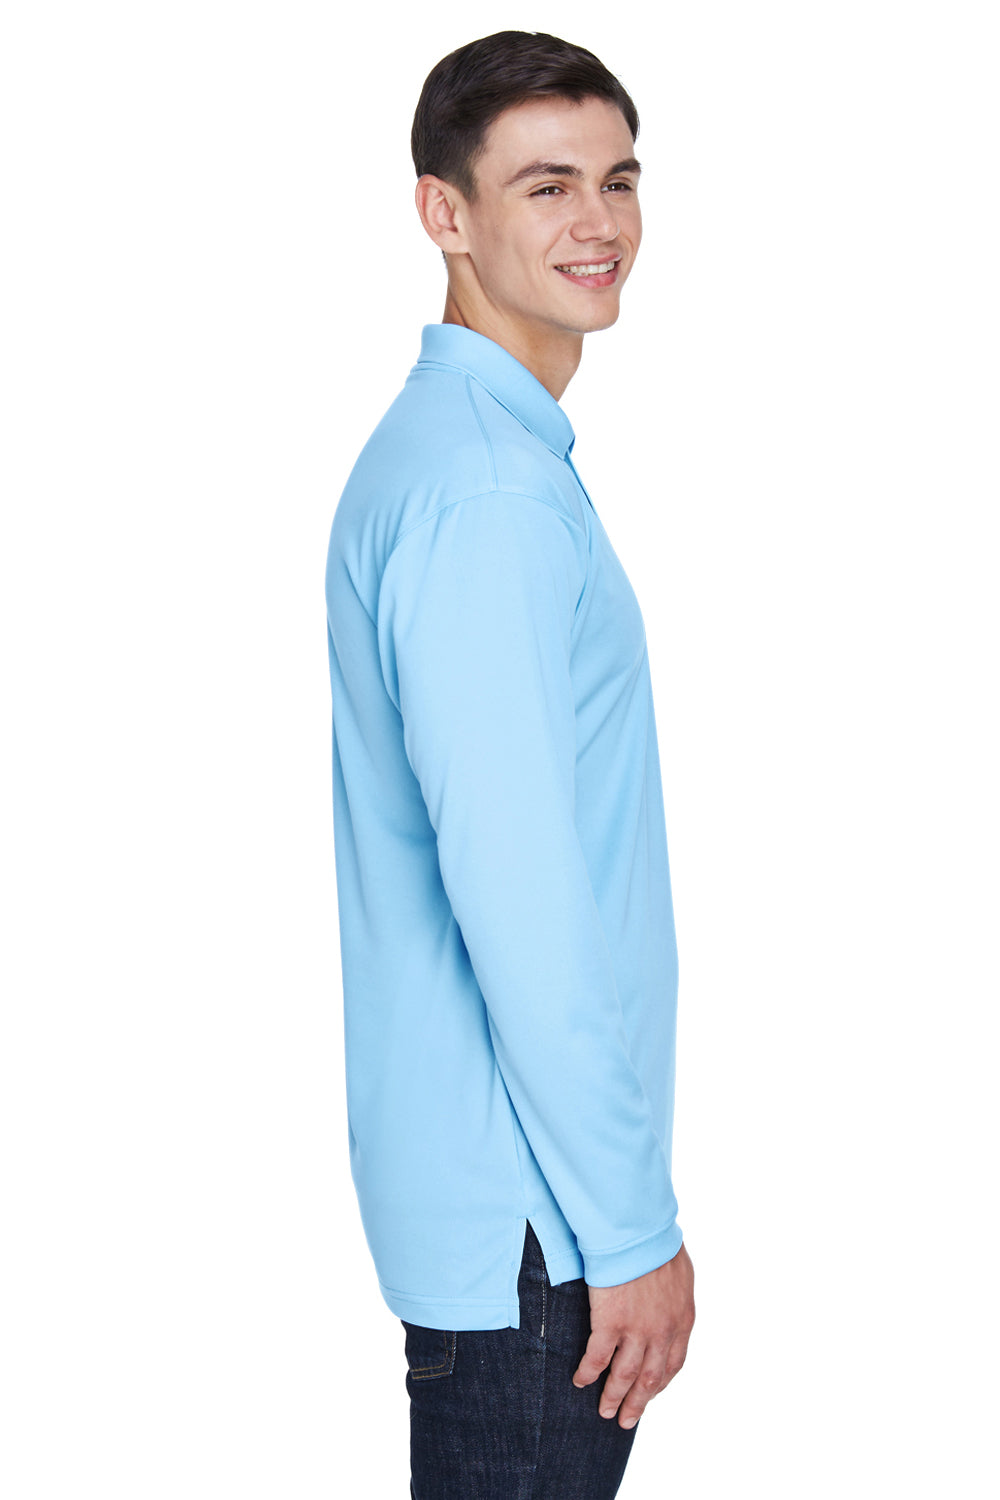 UltraClub 8405LS Mens Cool & Dry Moisture Wicking Long Sleeve Polo Shirt Columbia Blue Side